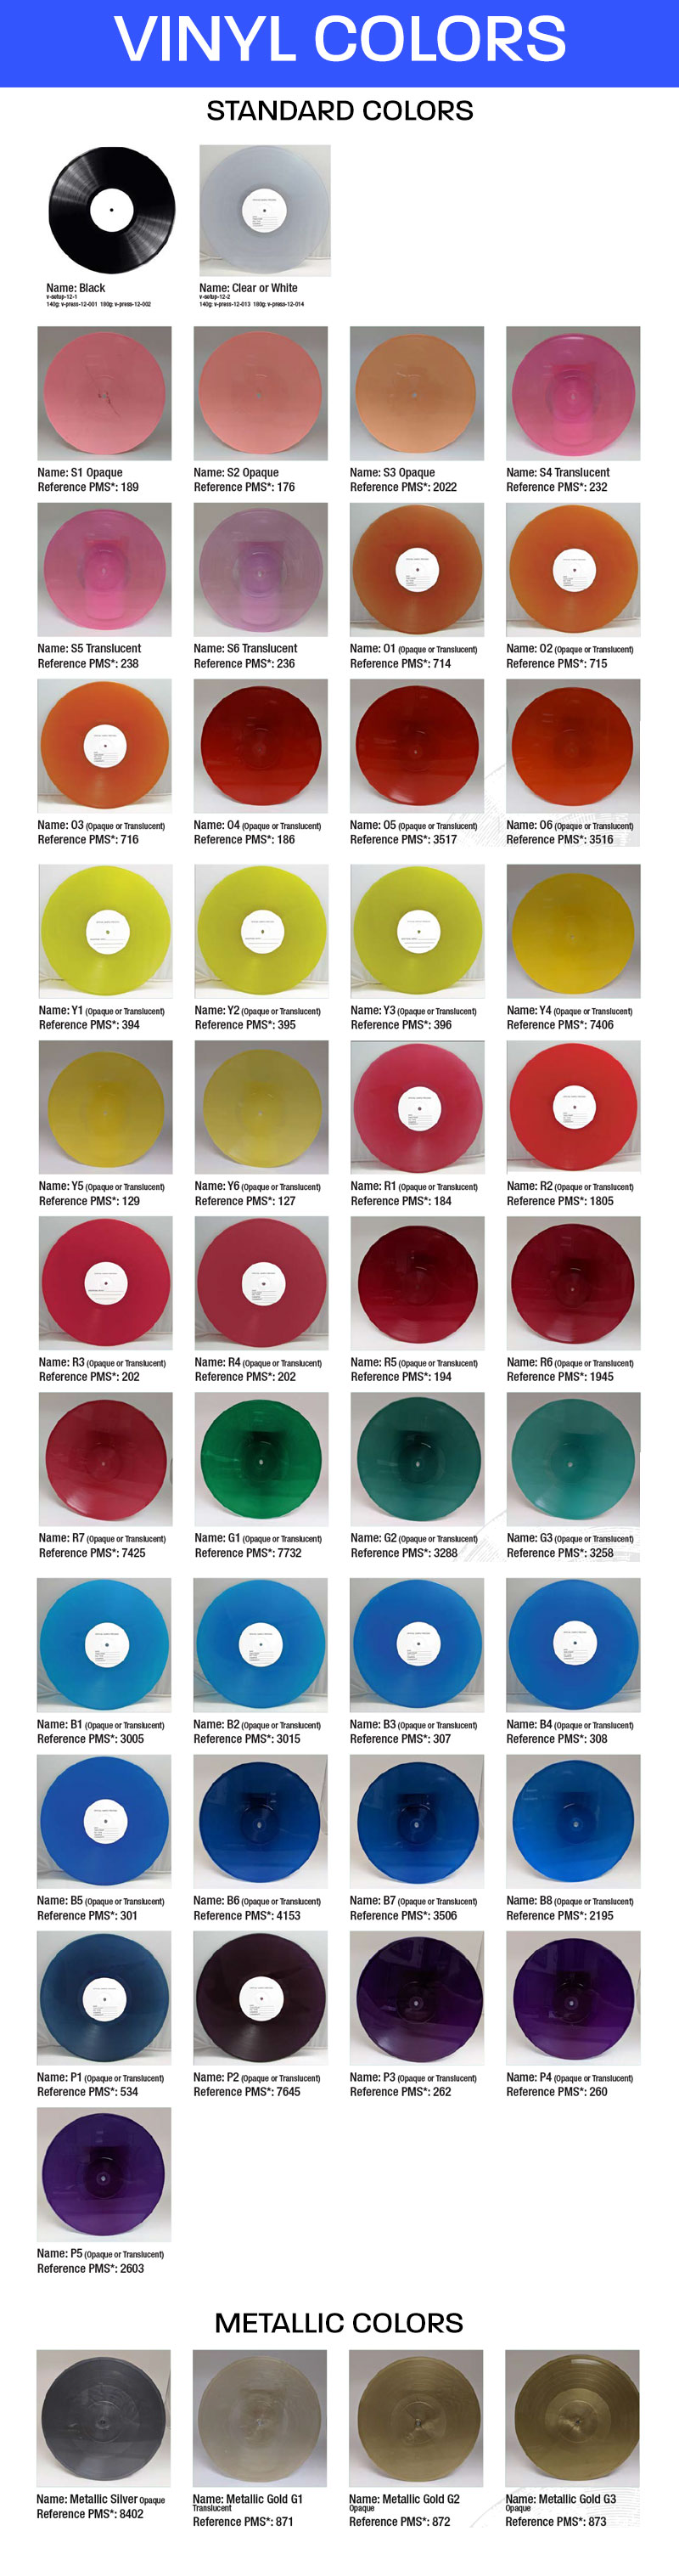 Colour vinyl options from Duplication.com